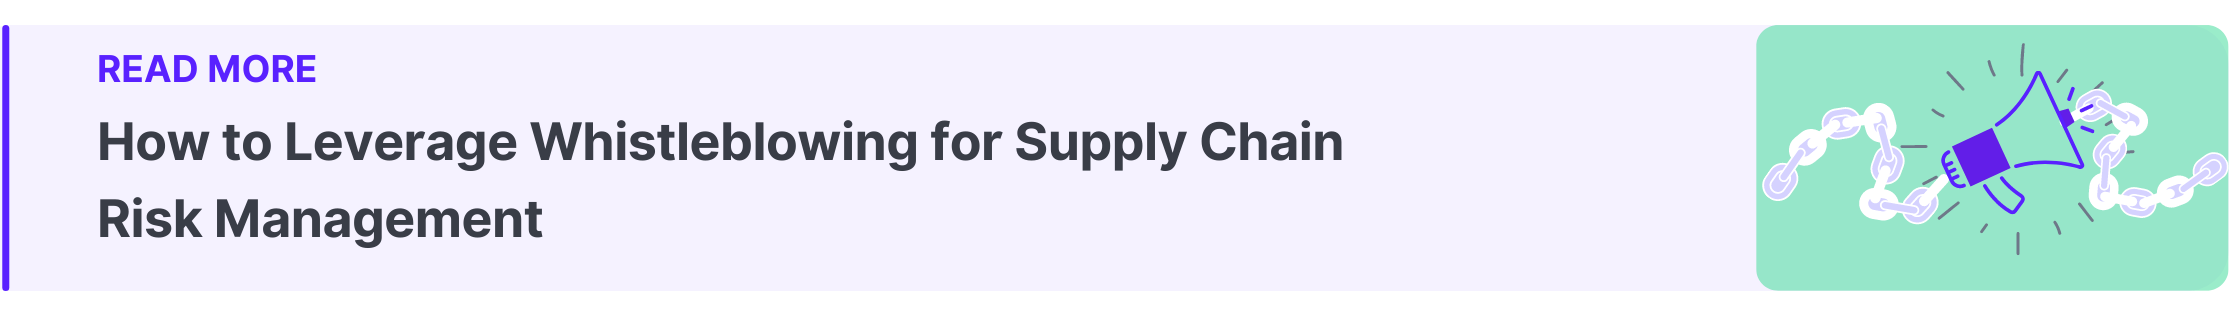 supply chain risks WB banner (2)